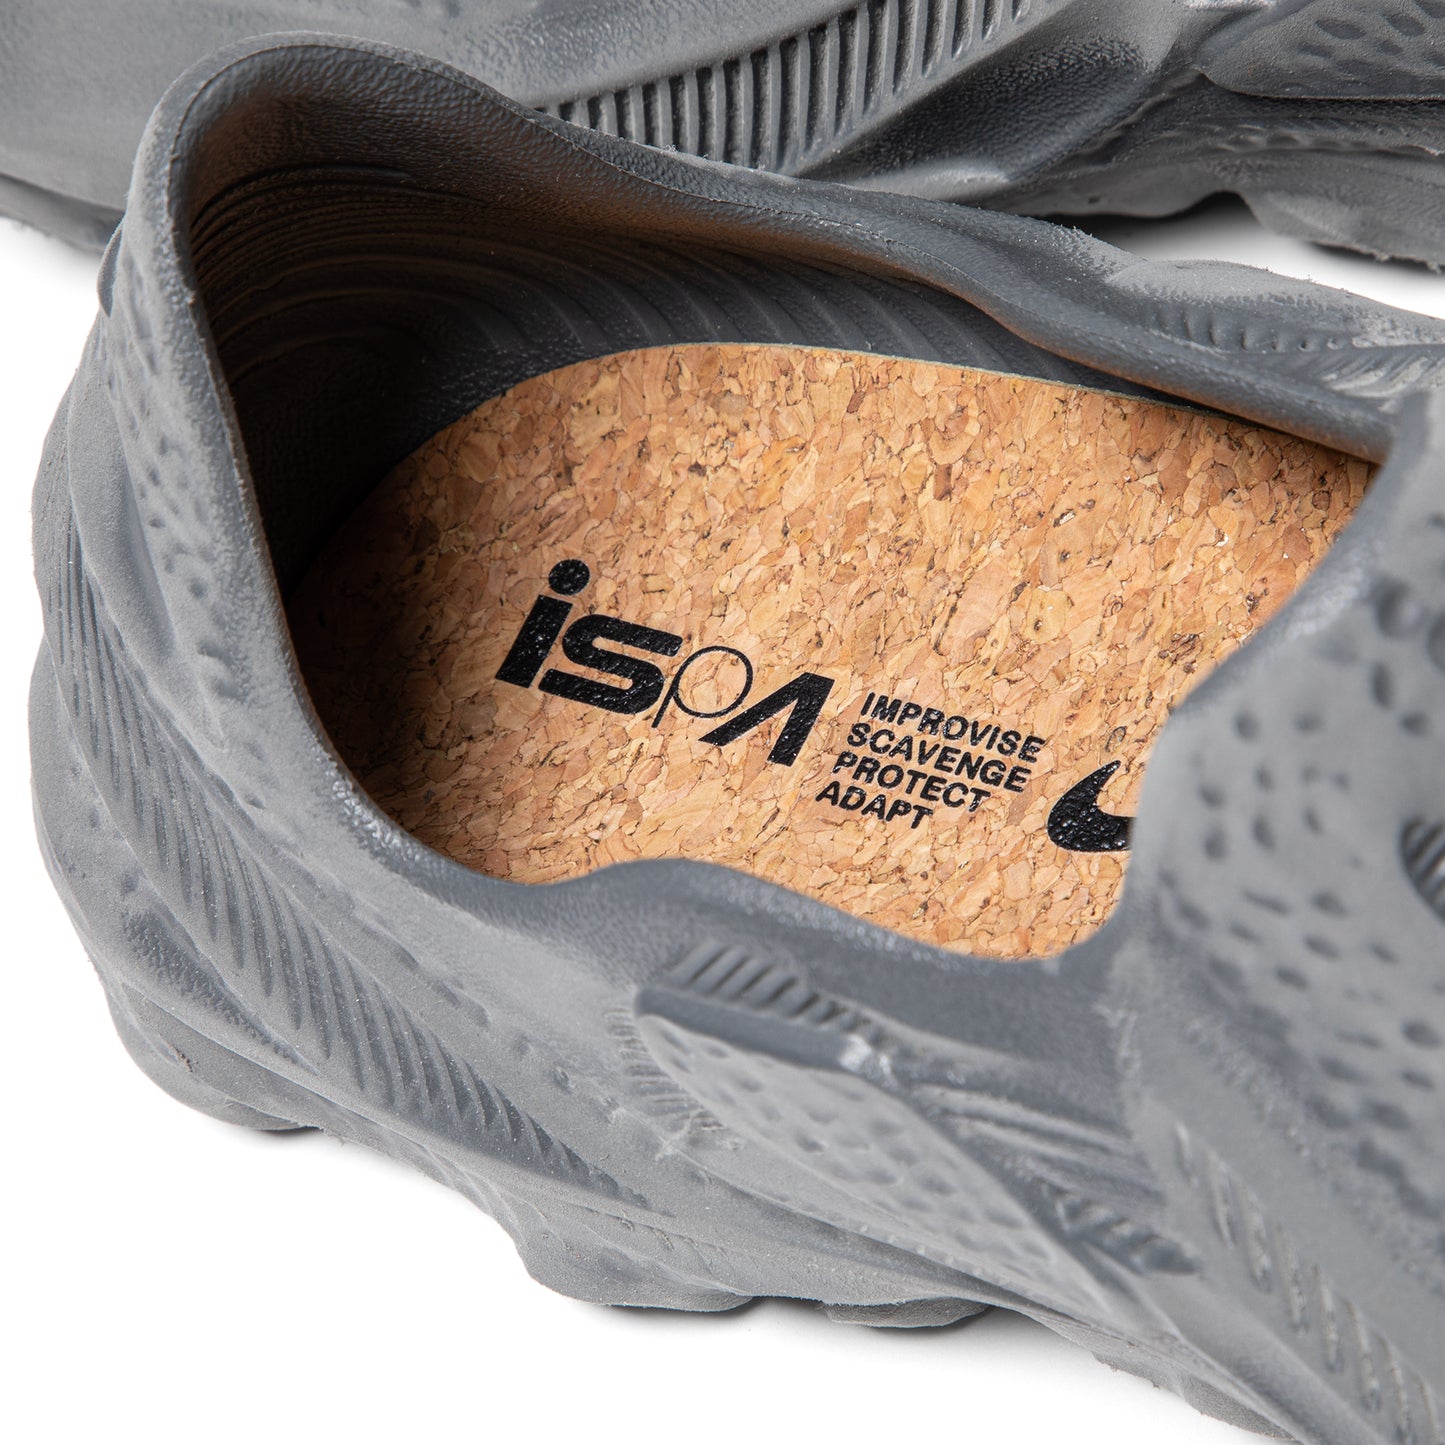 Nike ISPA Universal (Smoke Grey)